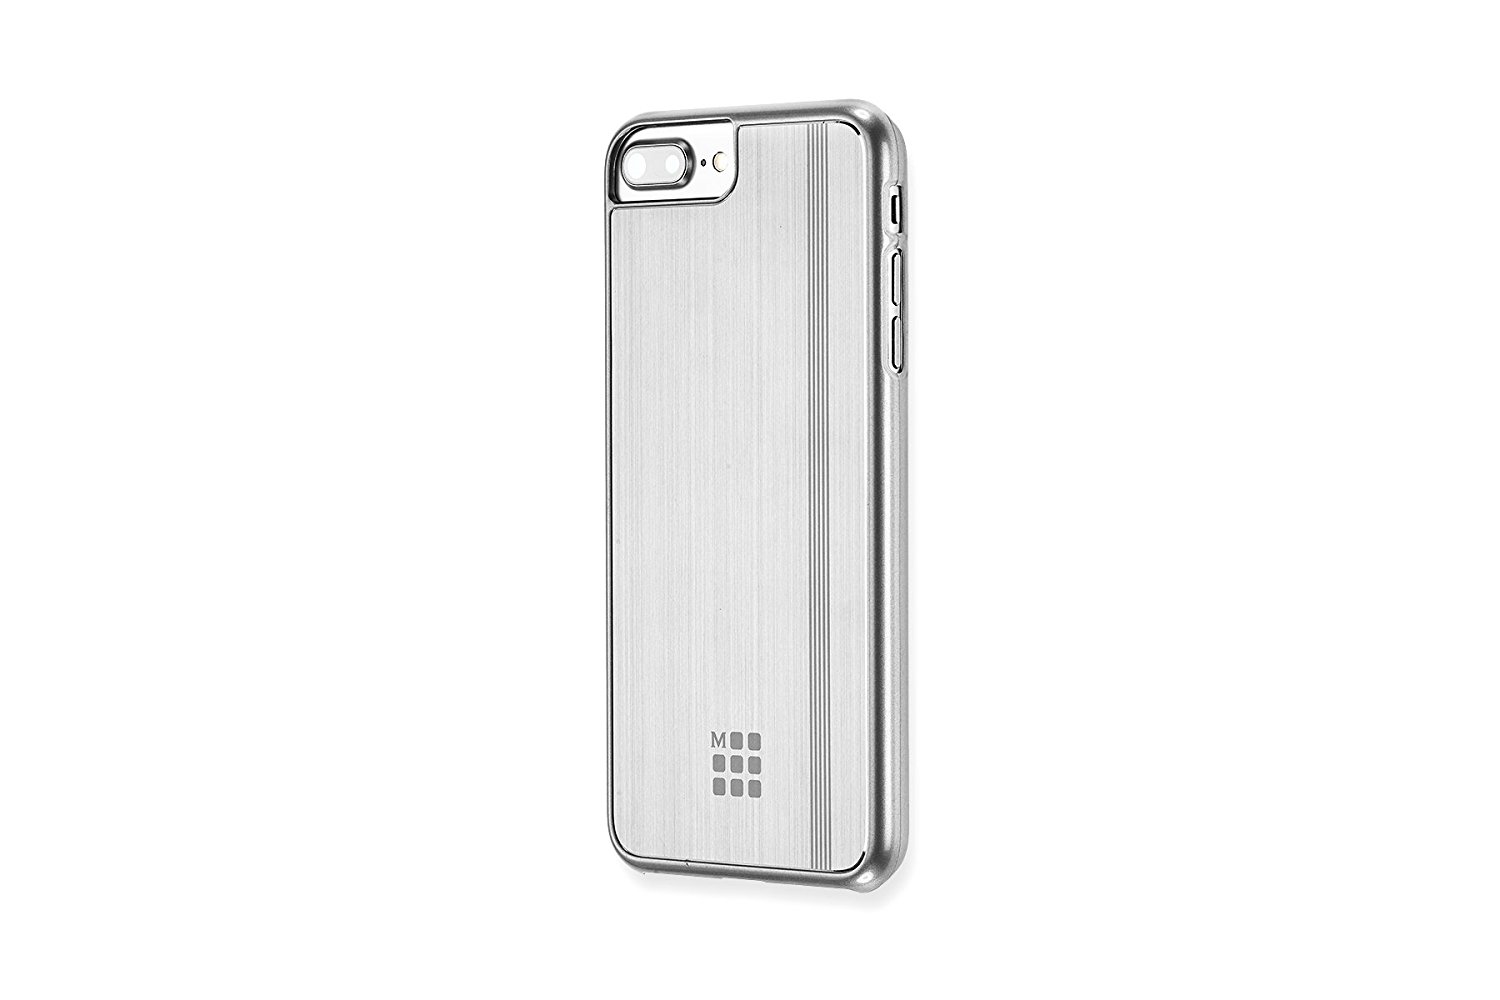  Carcasa Silver Hard Case Iphone 7 Plus | Moleskine 